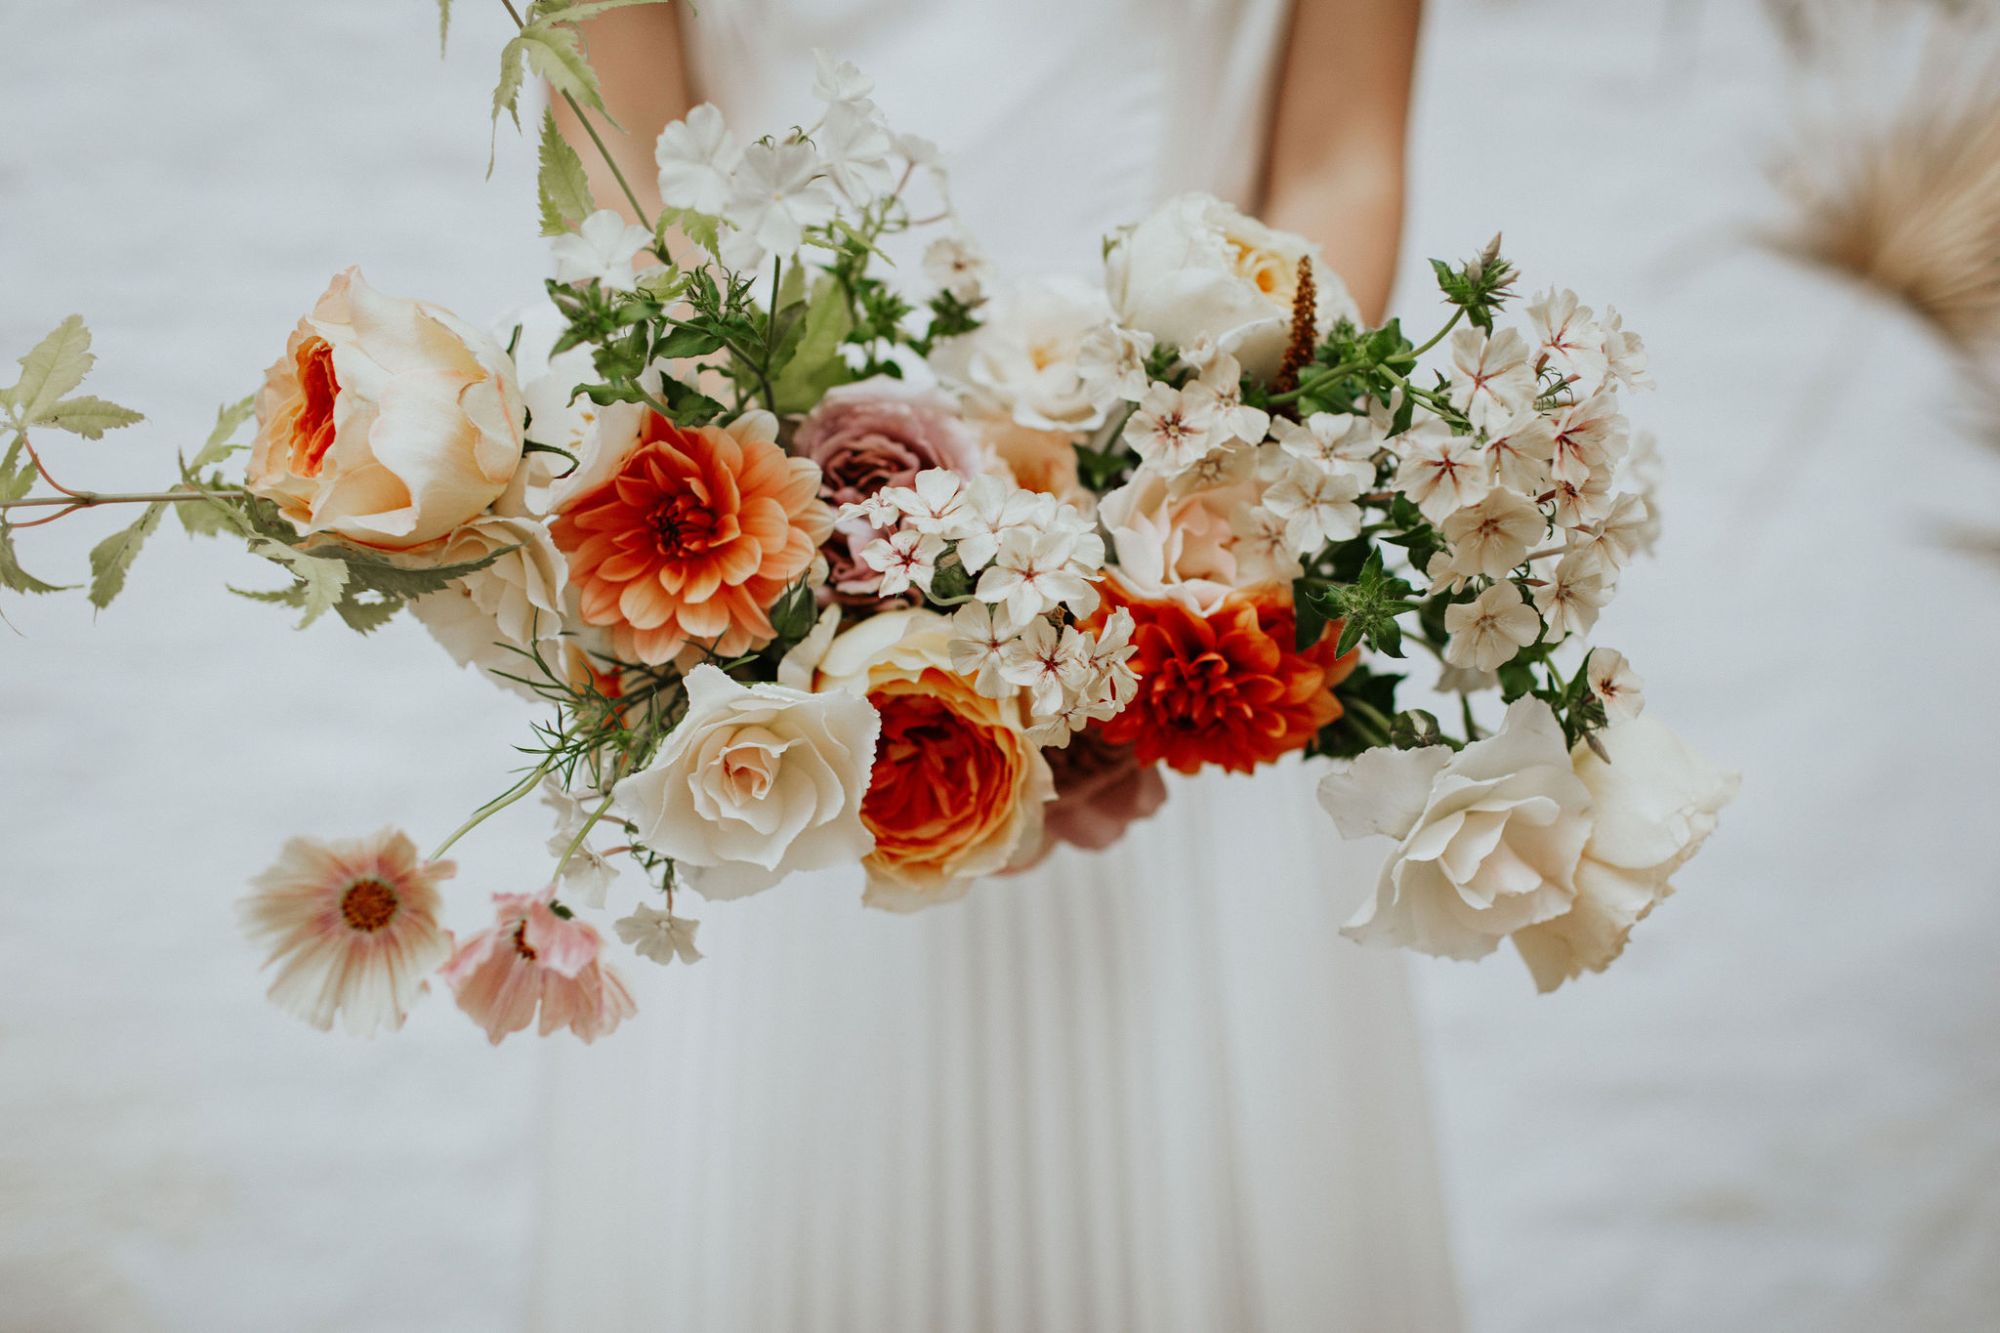 Wedding bouquet by Clementine Moon Florist